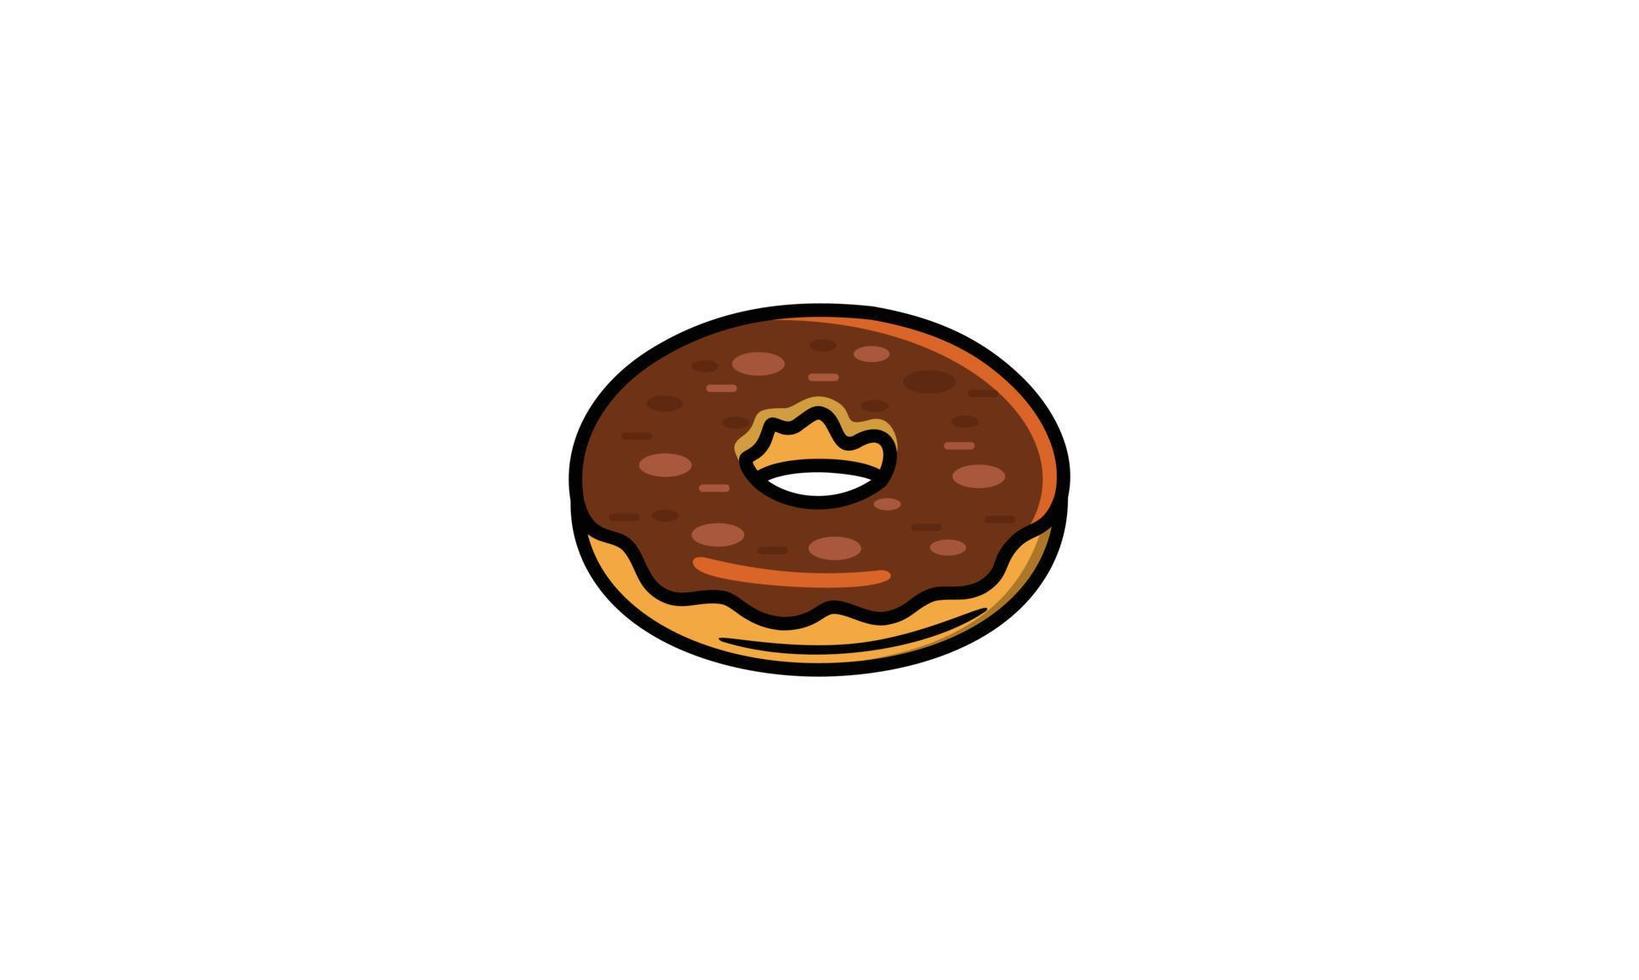 Chocolate Donut Illustration Design vector